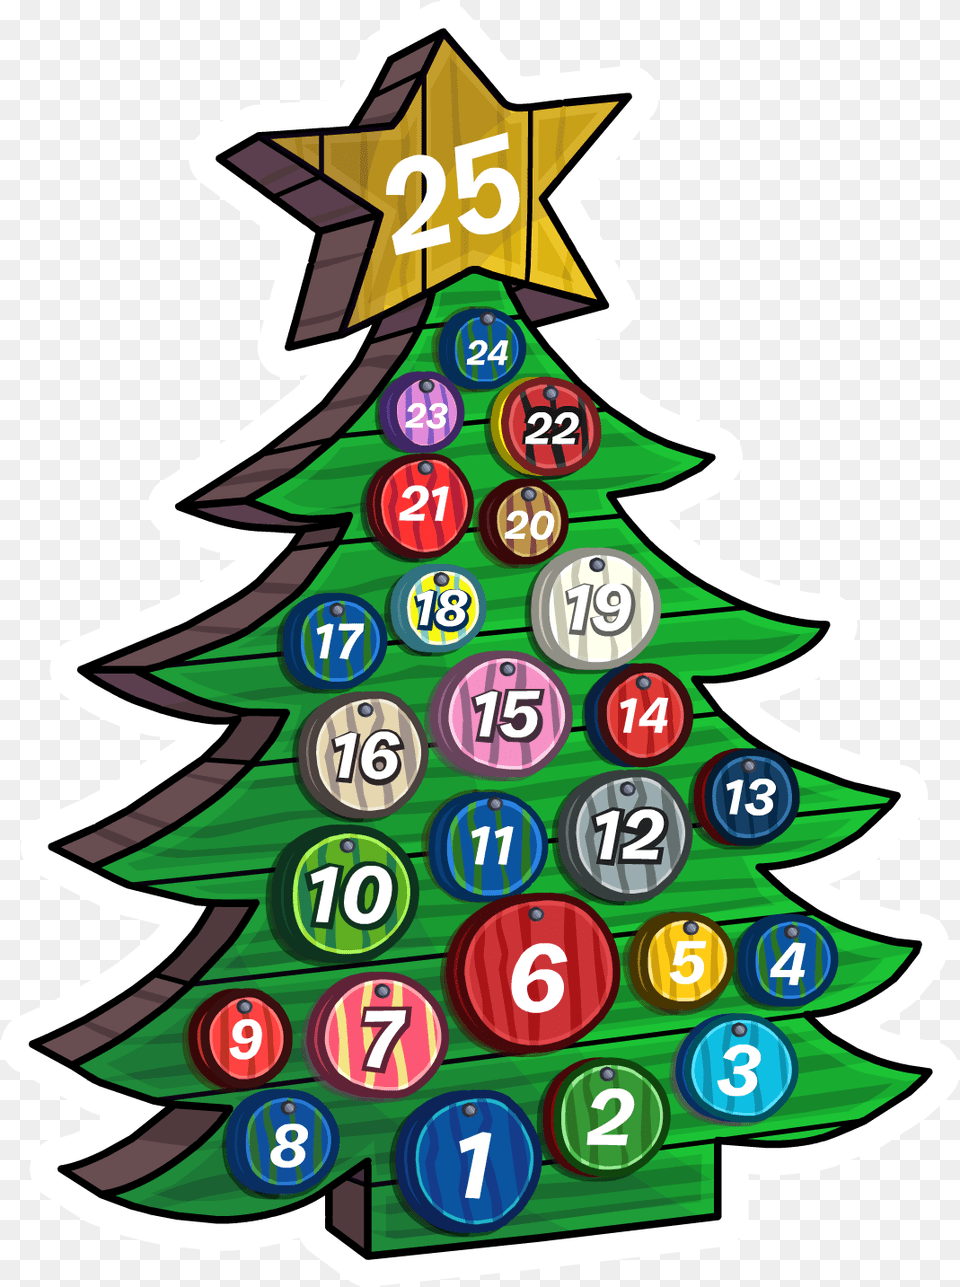 2016 Advent Calendar Club Penguin Wiki Fandom Christmas Tree Advent Calendar Clip Art, Dynamite, Weapon, Christmas Decorations, Festival Png Image